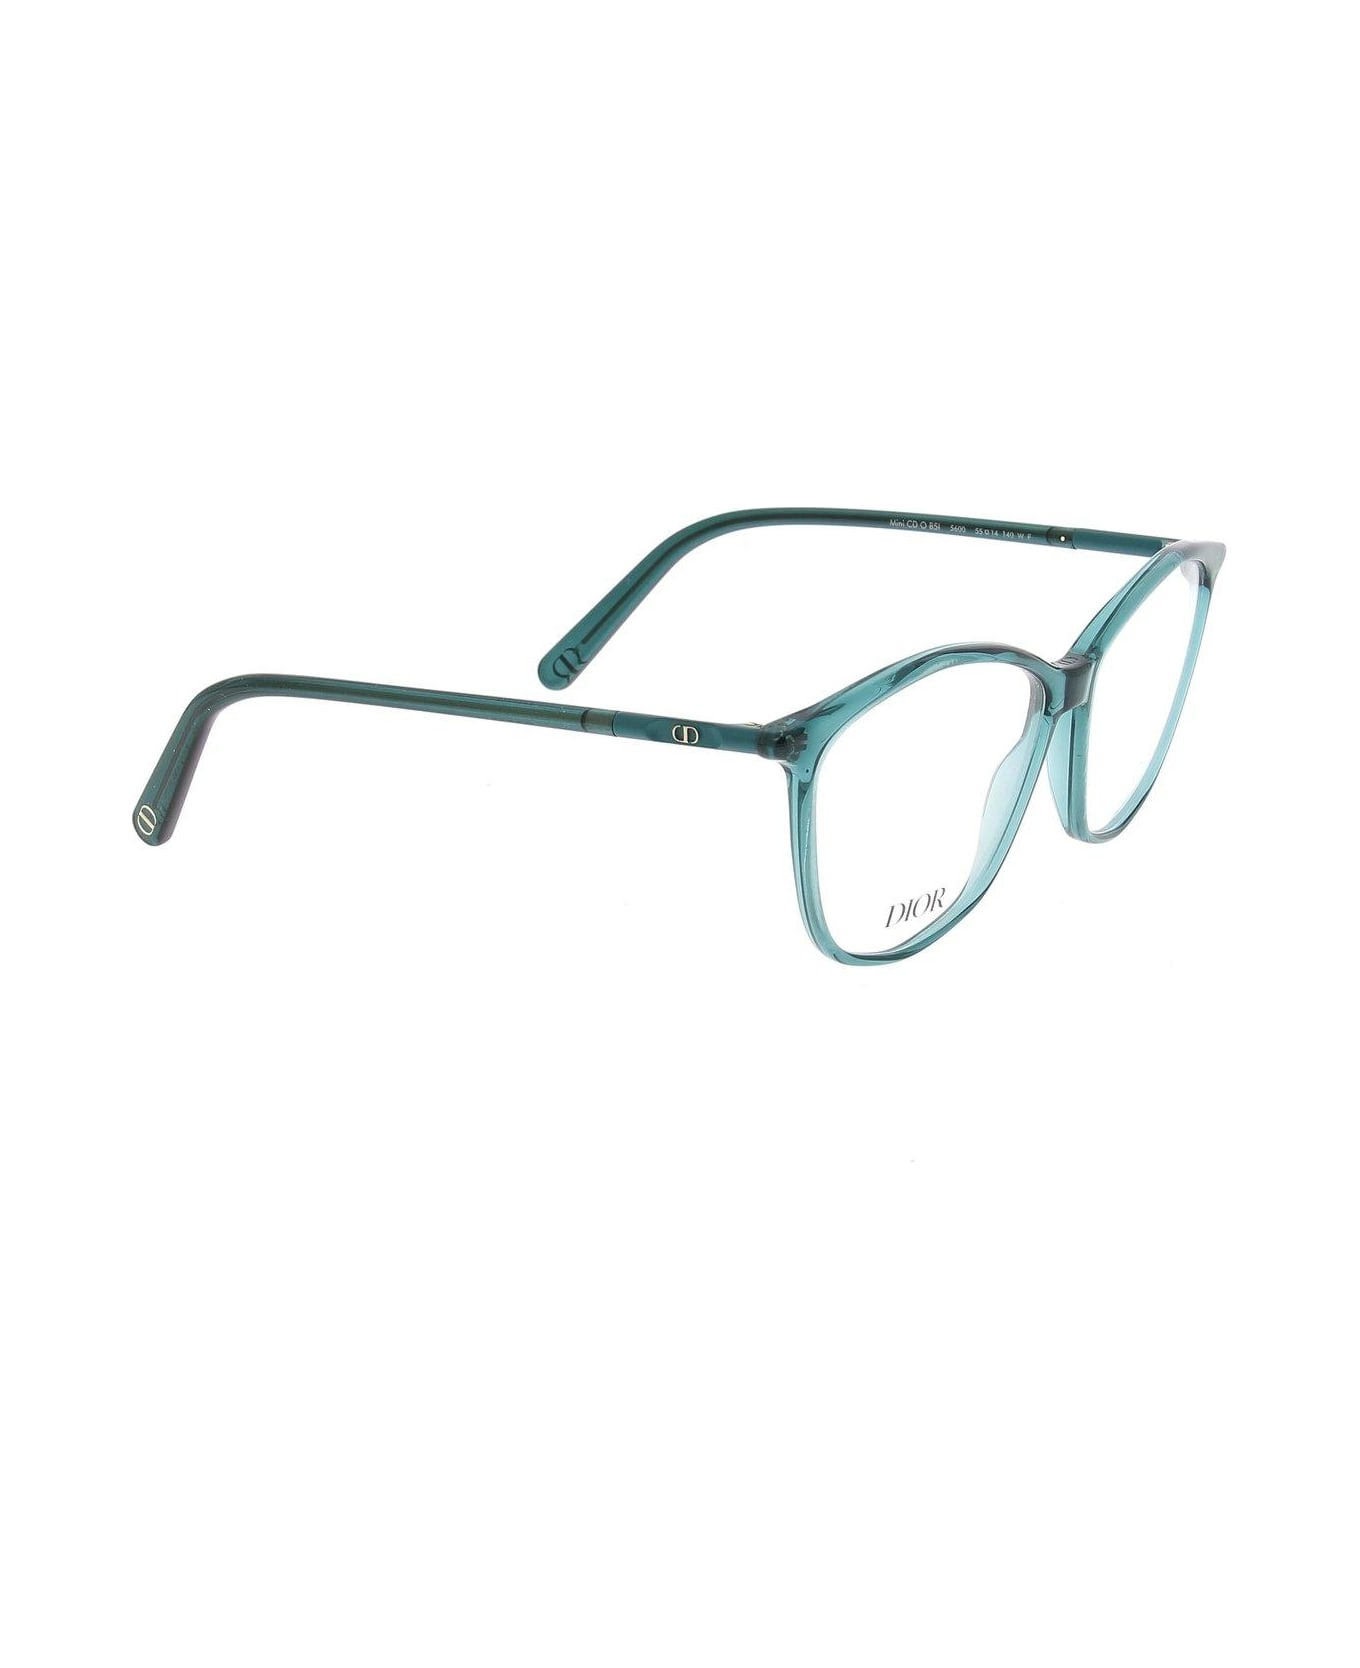 Dior Eyewear Cat-eye Frame Glasses - 5600 アイウェア